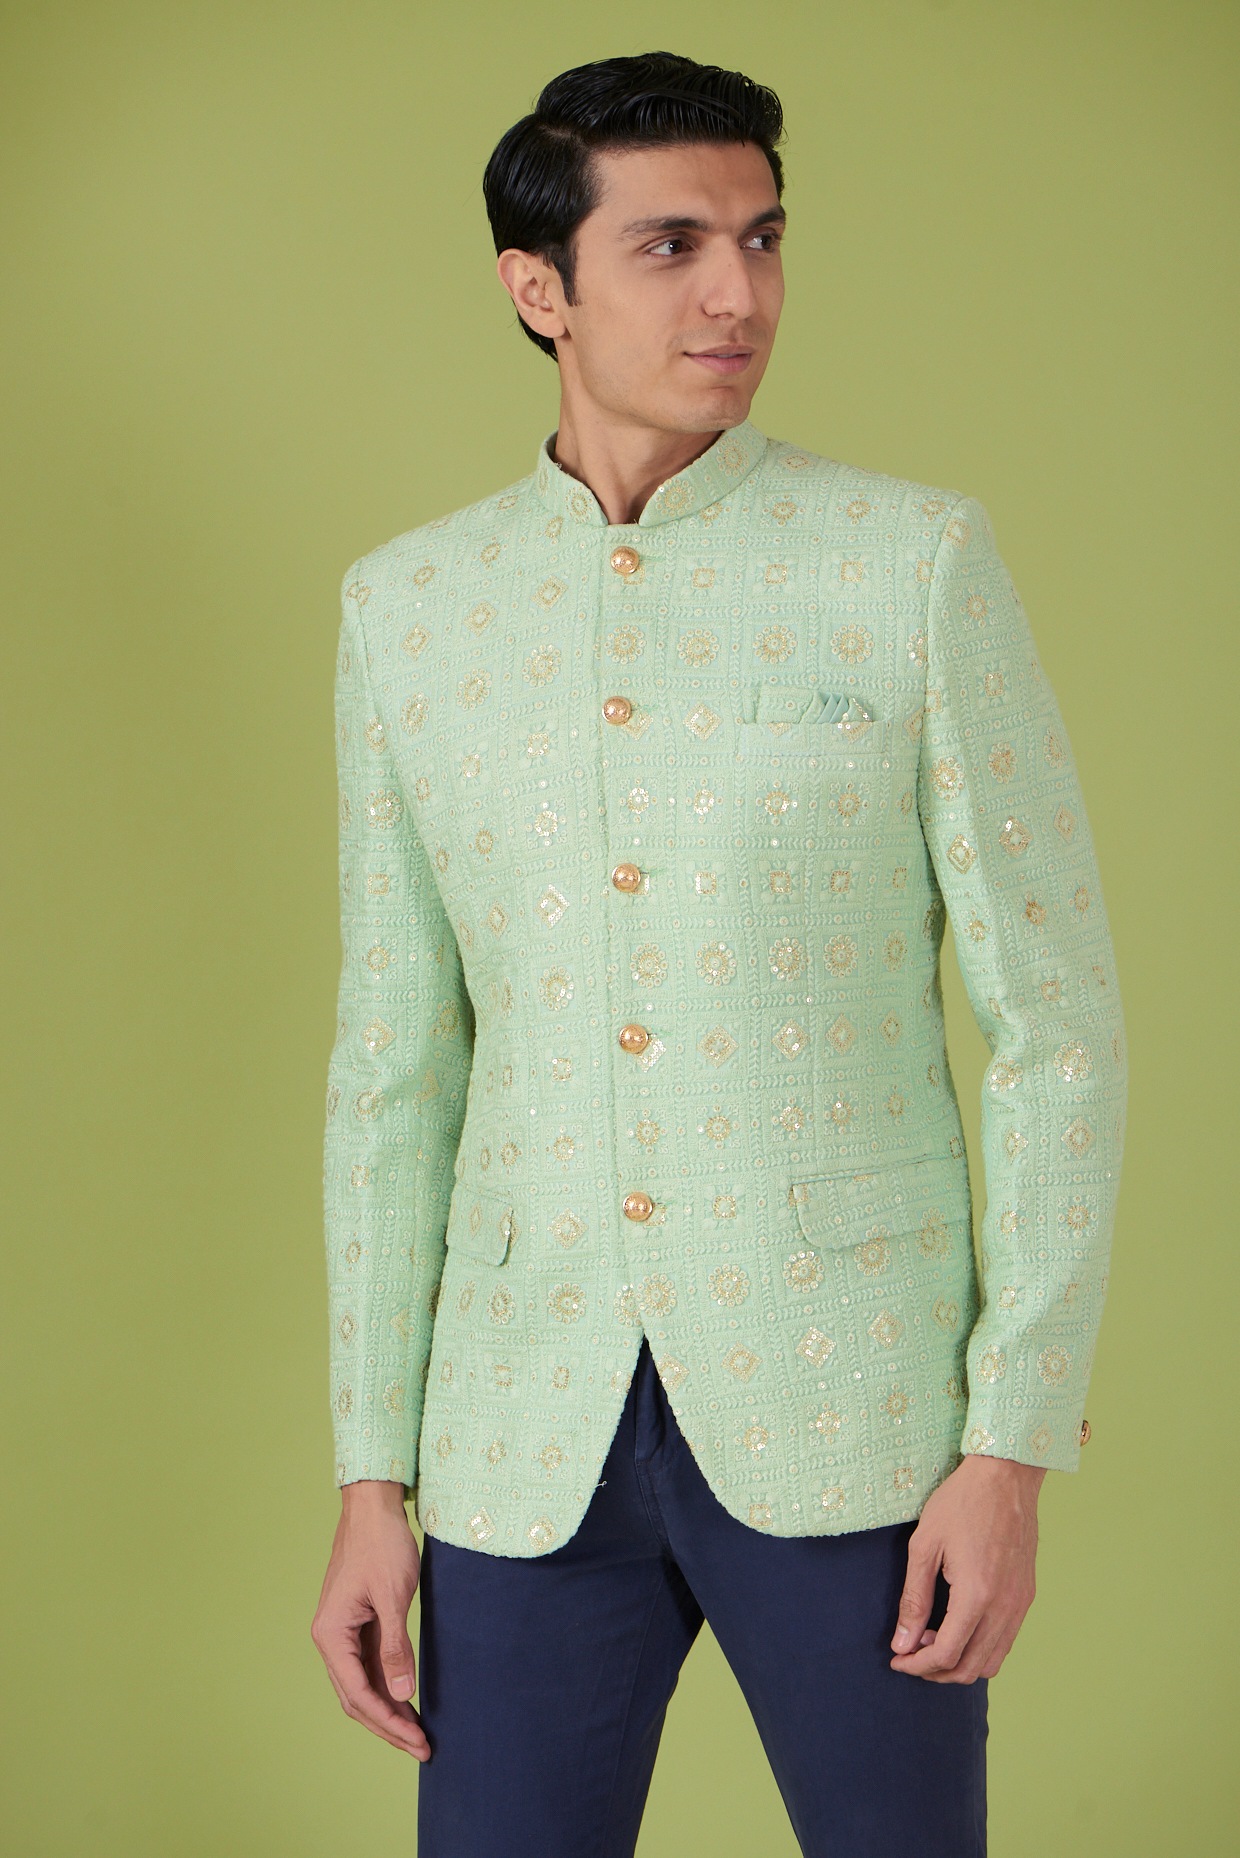 Men's New Wedding Formal Party Wear Jodhpuri Jacket Dinner Smoking Slim Fit  Coat | eBay